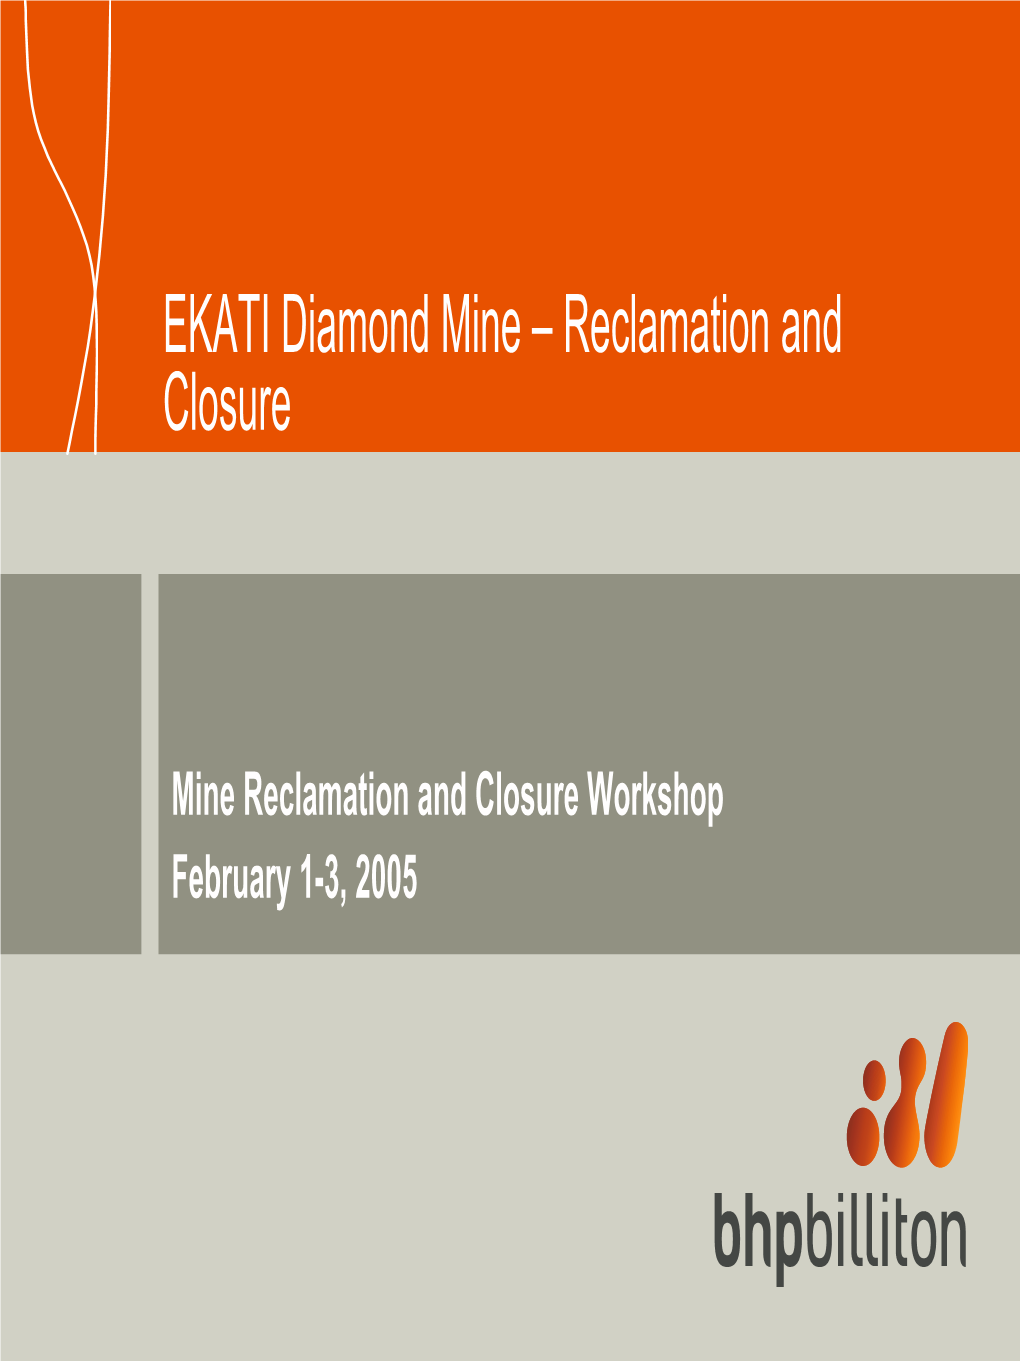 EKATI Diamond Mine – Reclamation and Closure